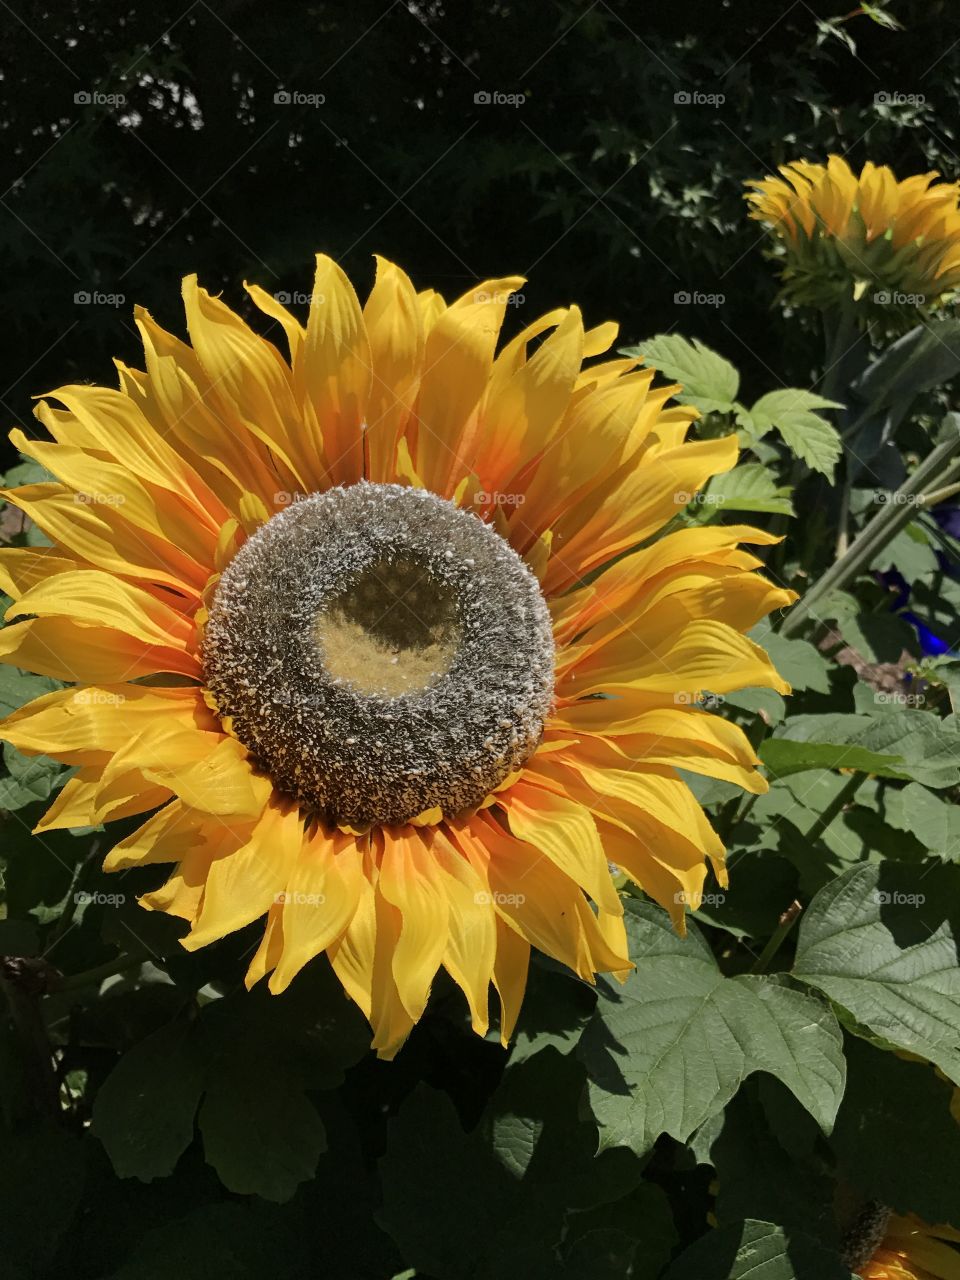 Sunflower burst